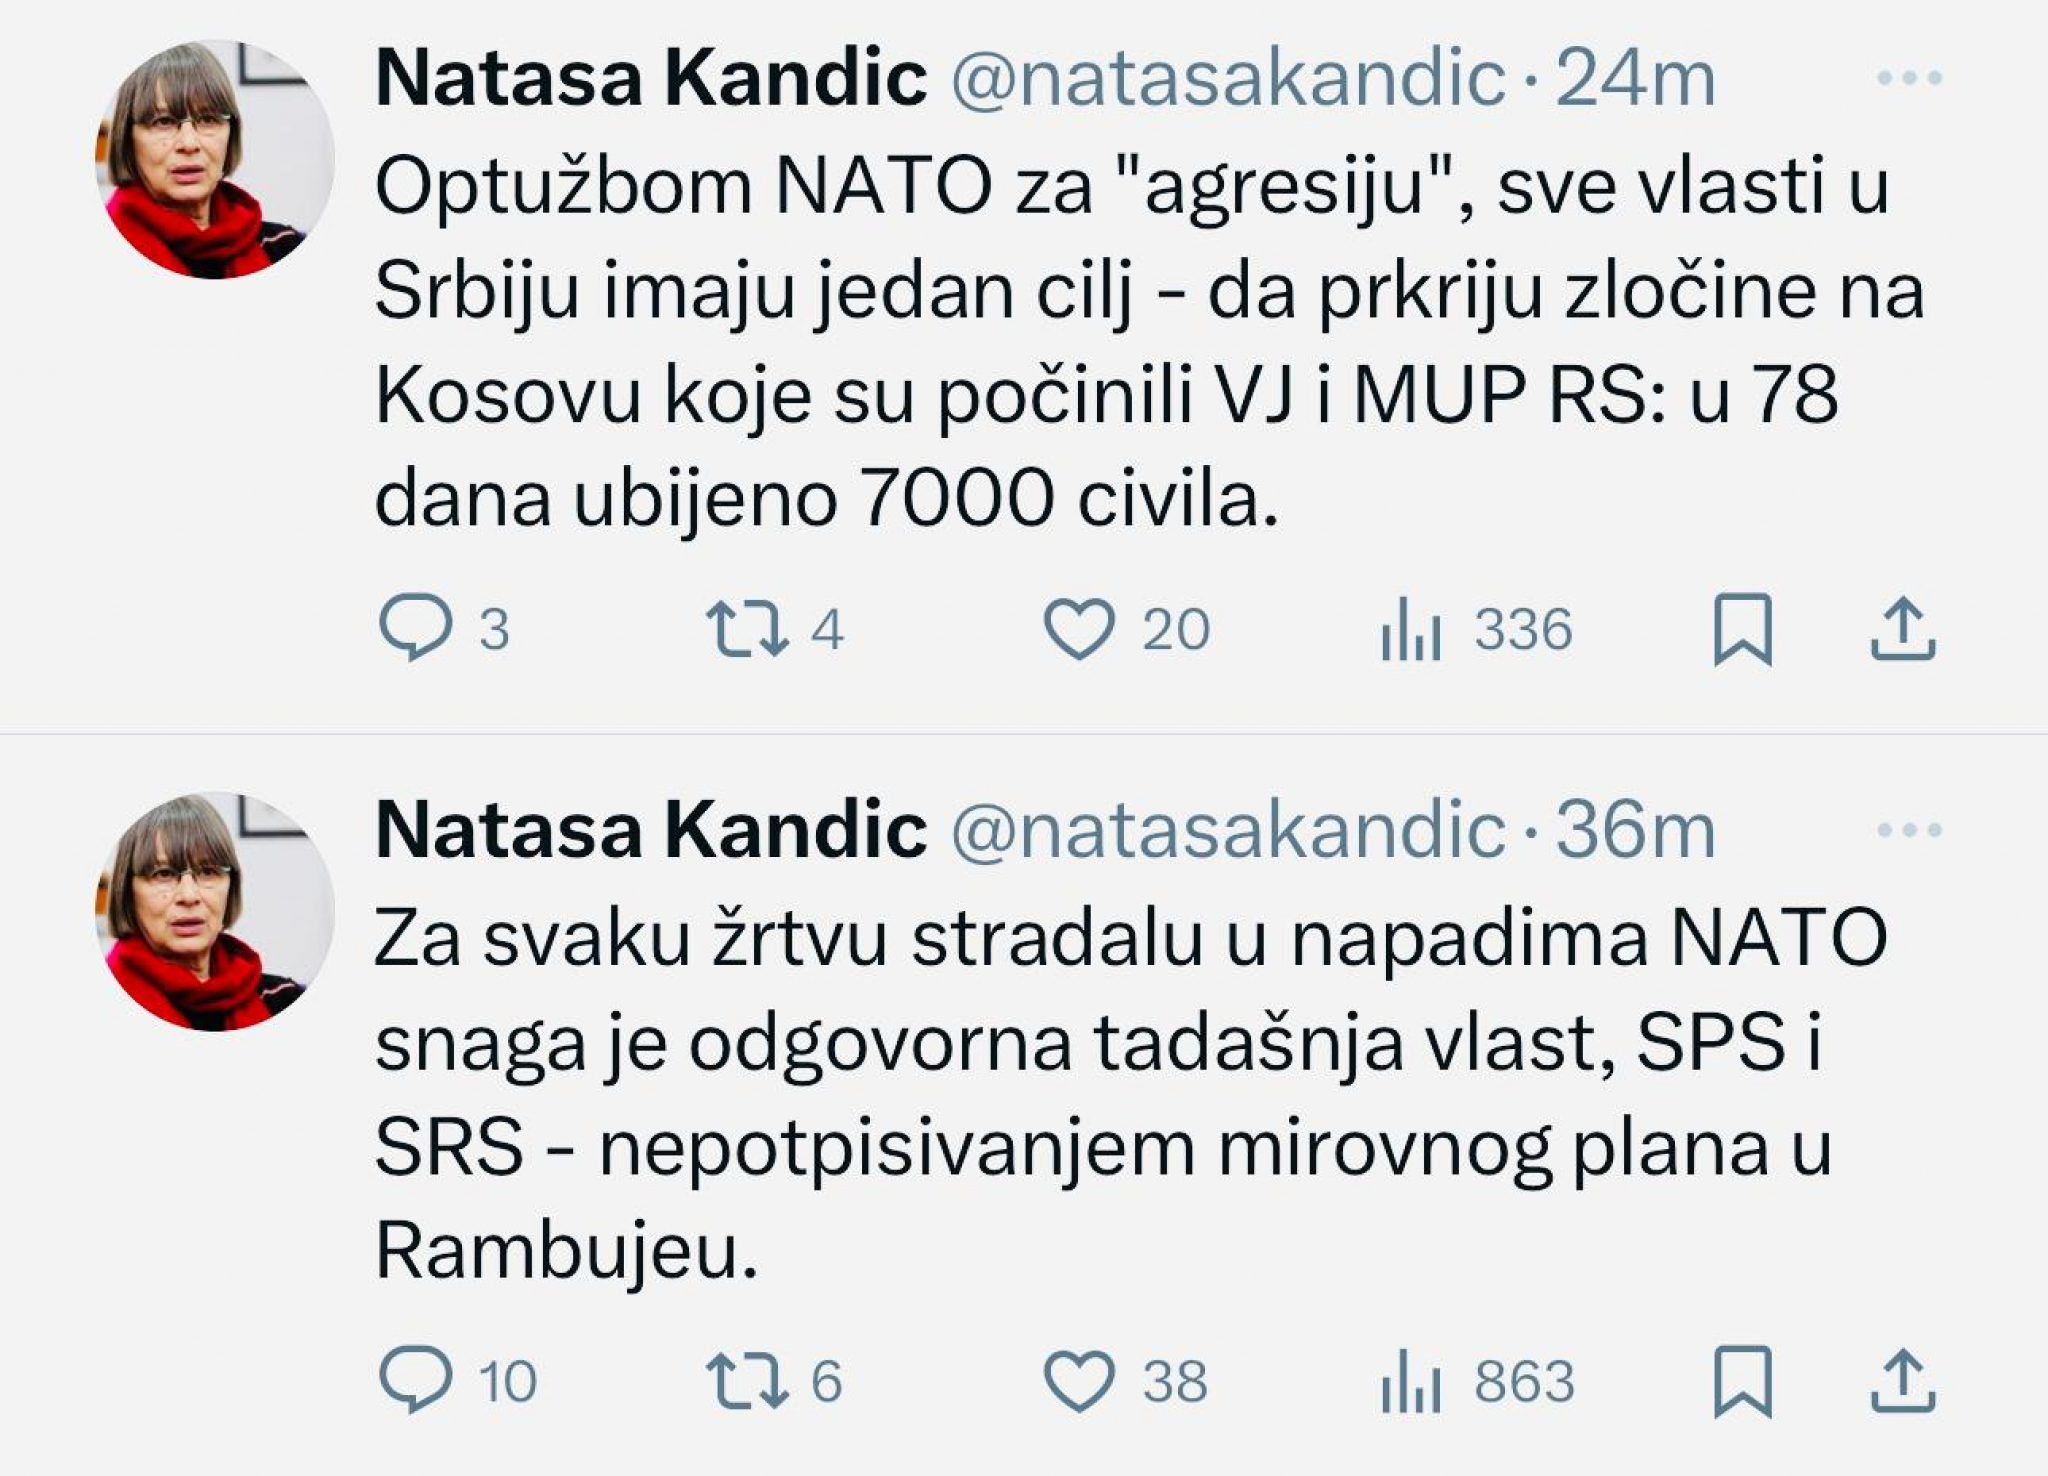 Nataša Kandić